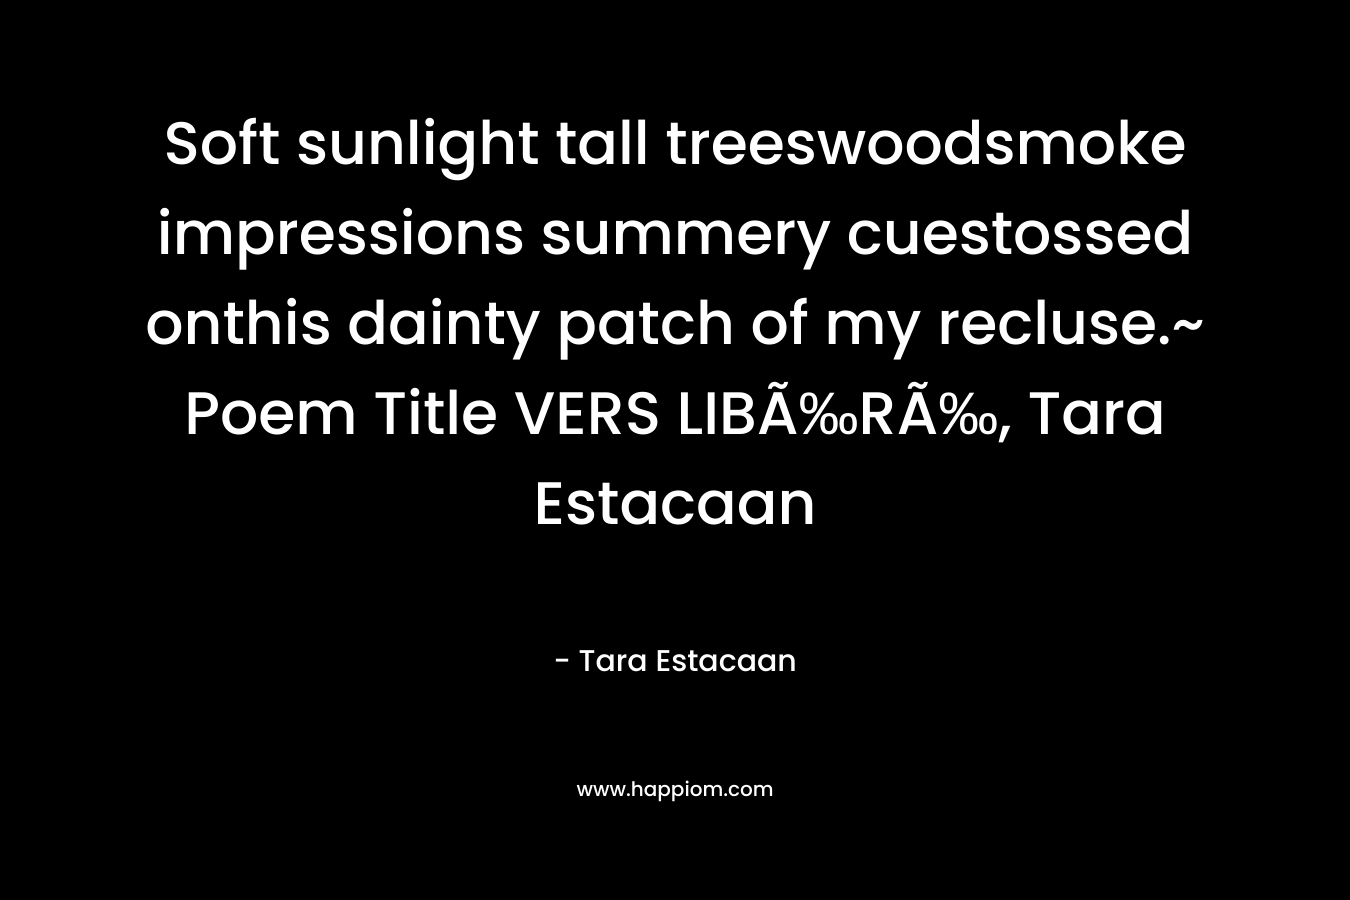 Soft sunlight tall treeswoodsmoke impressions summery cuestossed onthis dainty patch of my recluse.~ Poem Title VERS LIBÃ‰RÃ‰, Tara Estacaan